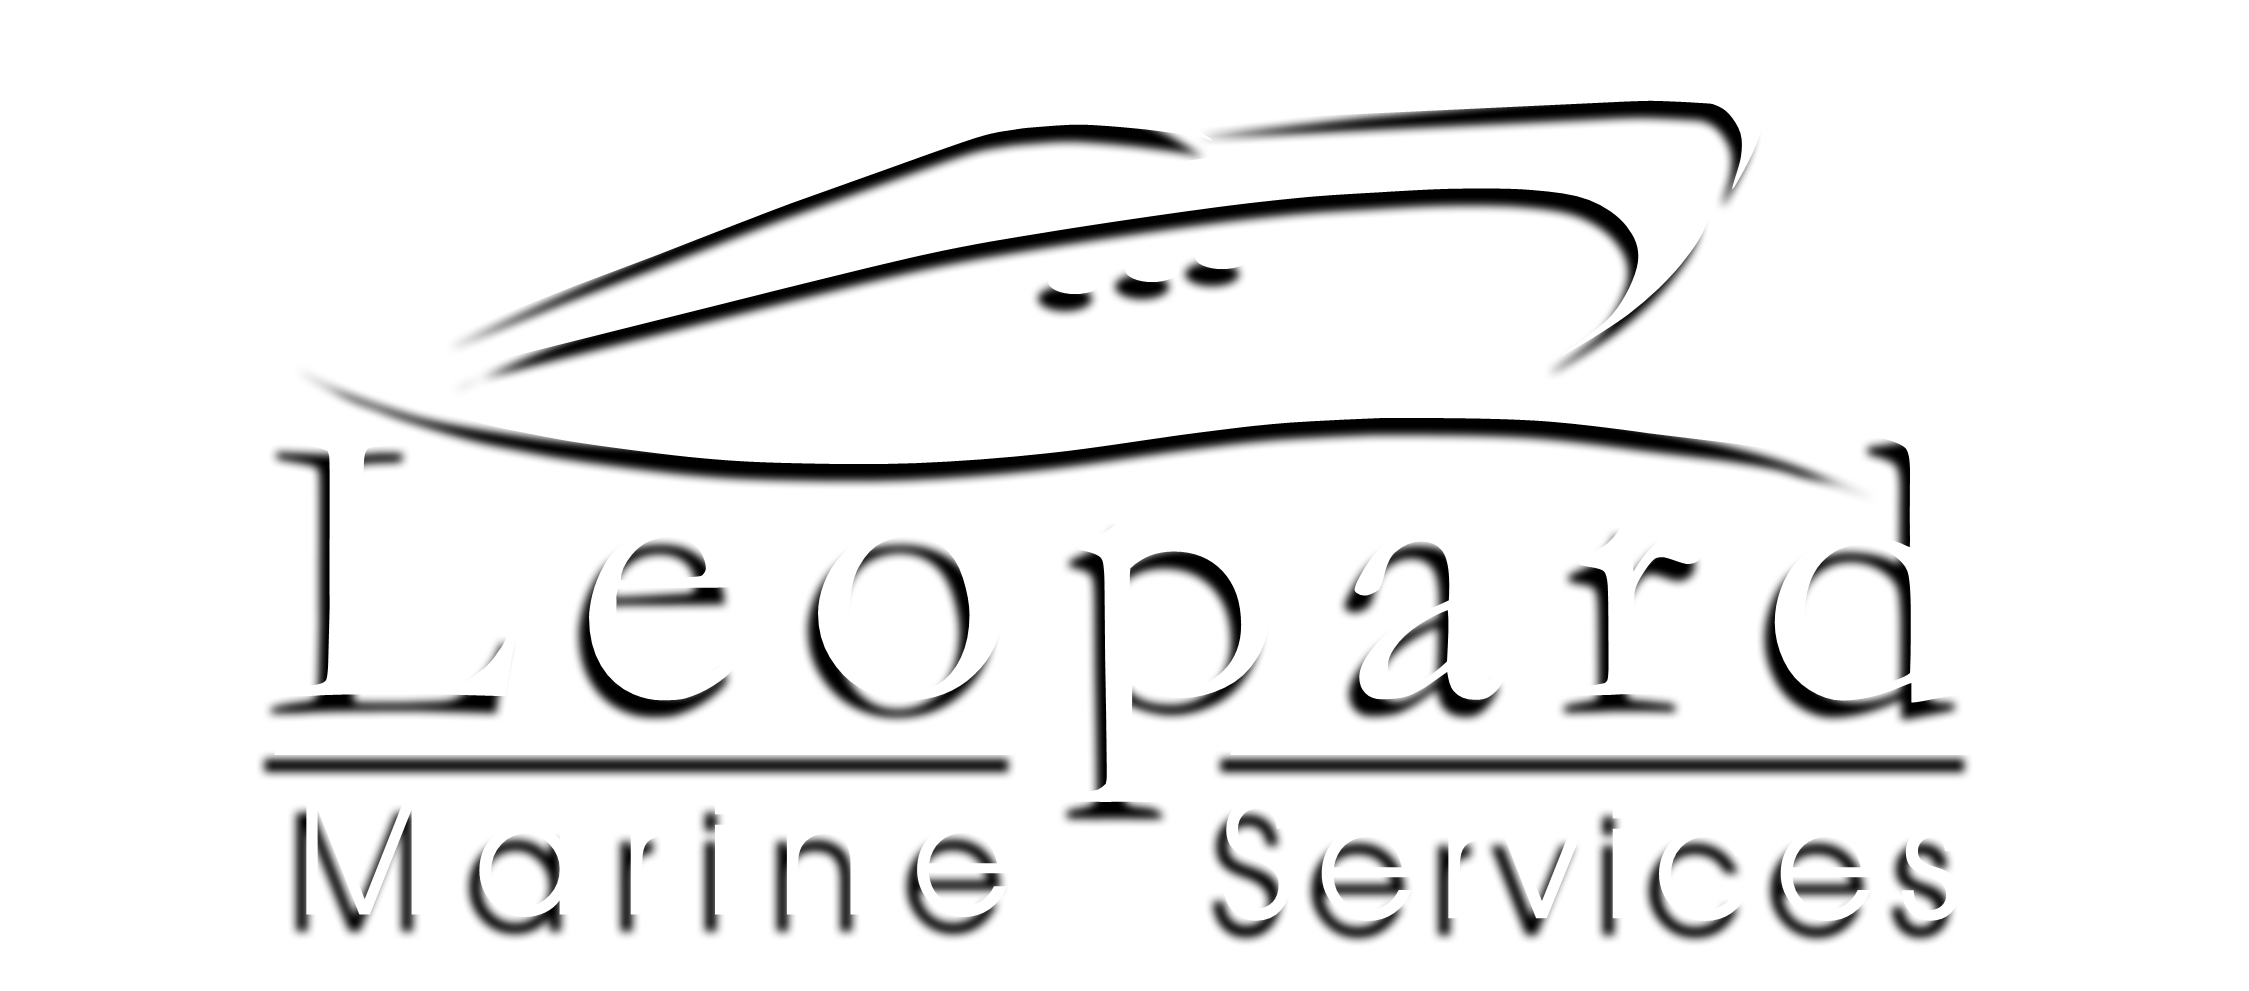 Leopard Marine Services